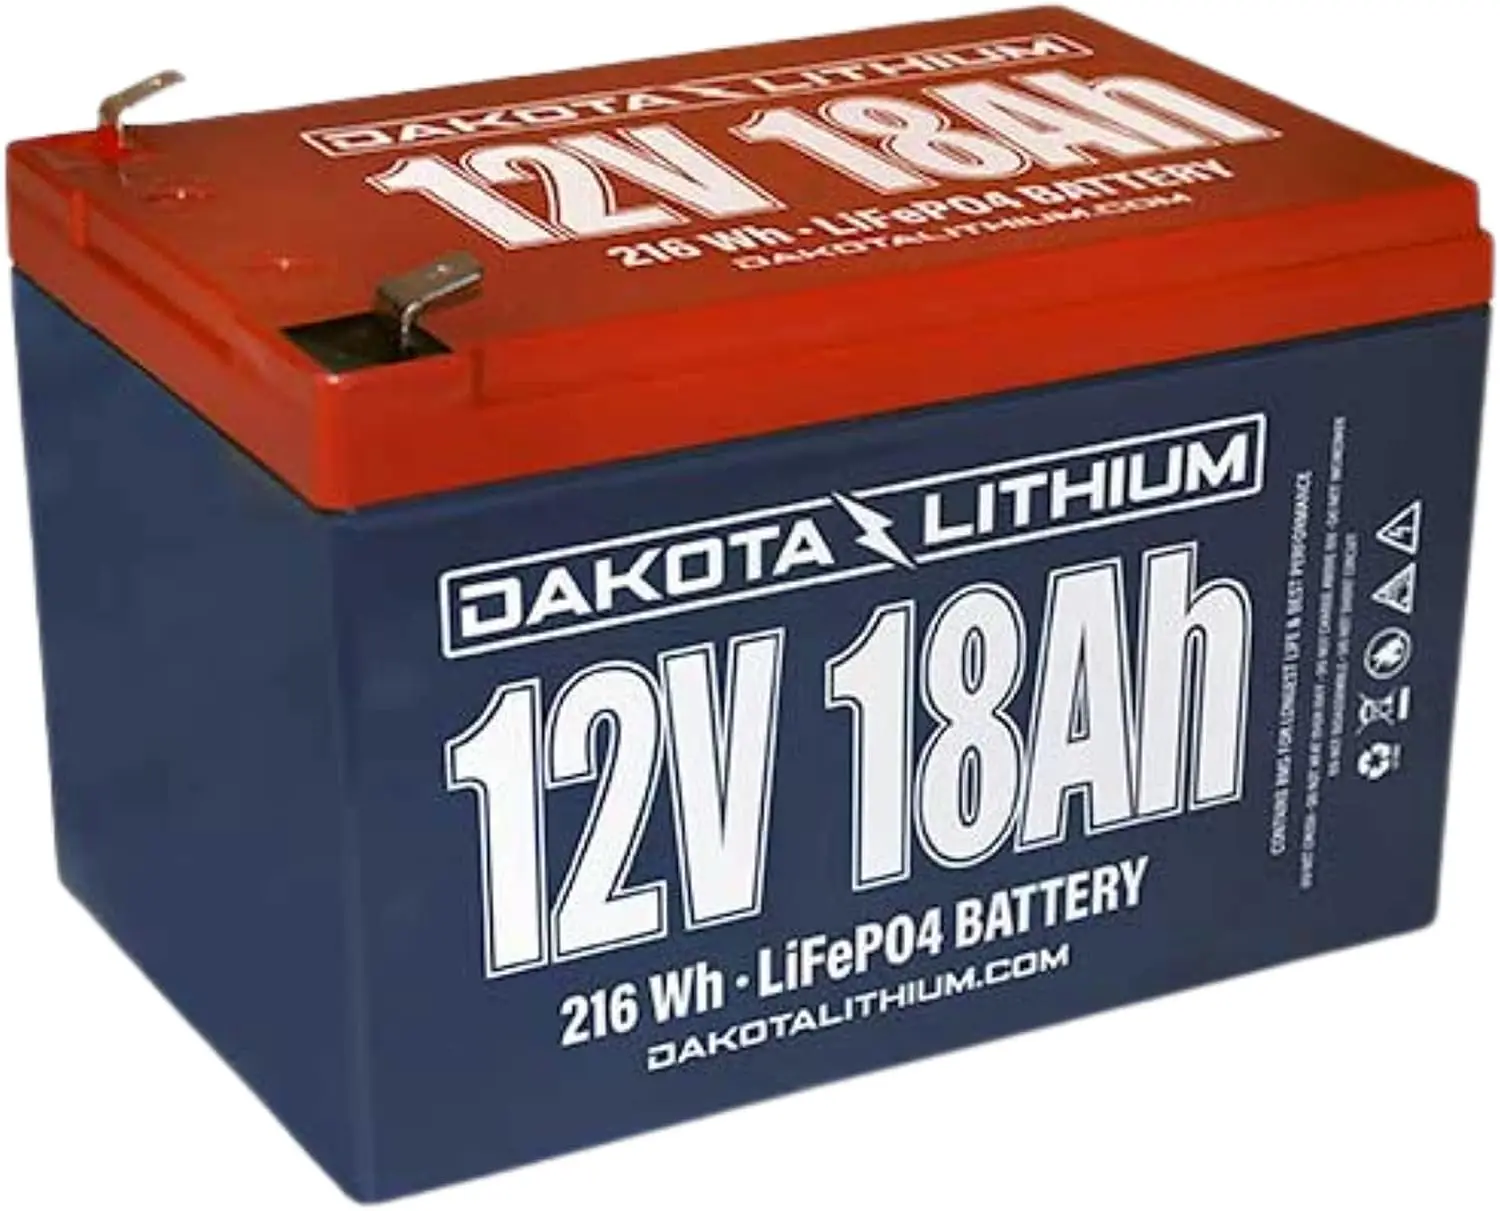 

Lithium \u2013 12V 18Ah LiFePO4 Deep Cycle Battery \u2013 11 Year USA Warranty 2000+ Cycles \u2013 Built in BMS \u2013 For Ice F